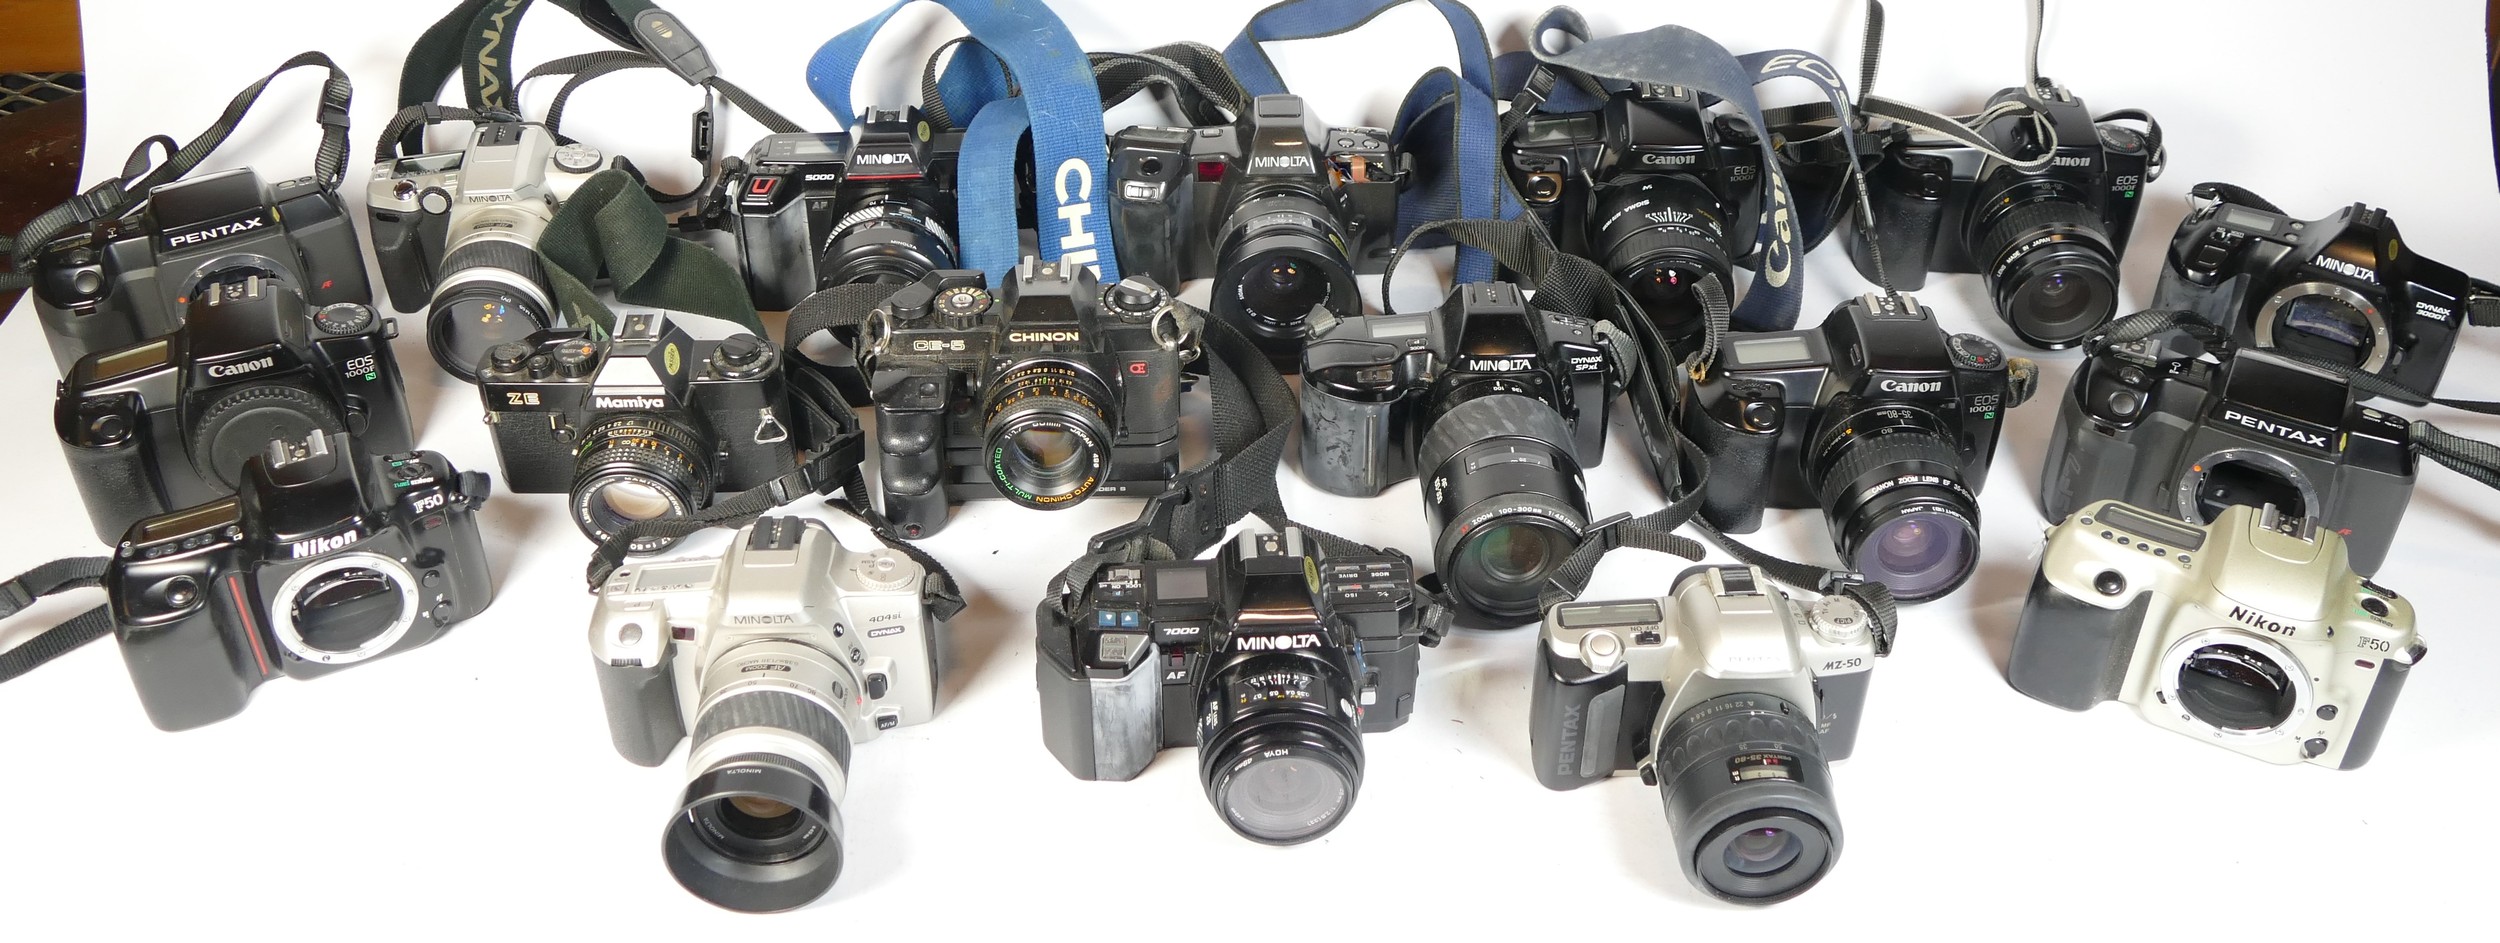 Twenty three SLR vintage film cameras to include a Canon EOS 500, a Nikon F50, a Minolta 5000 and